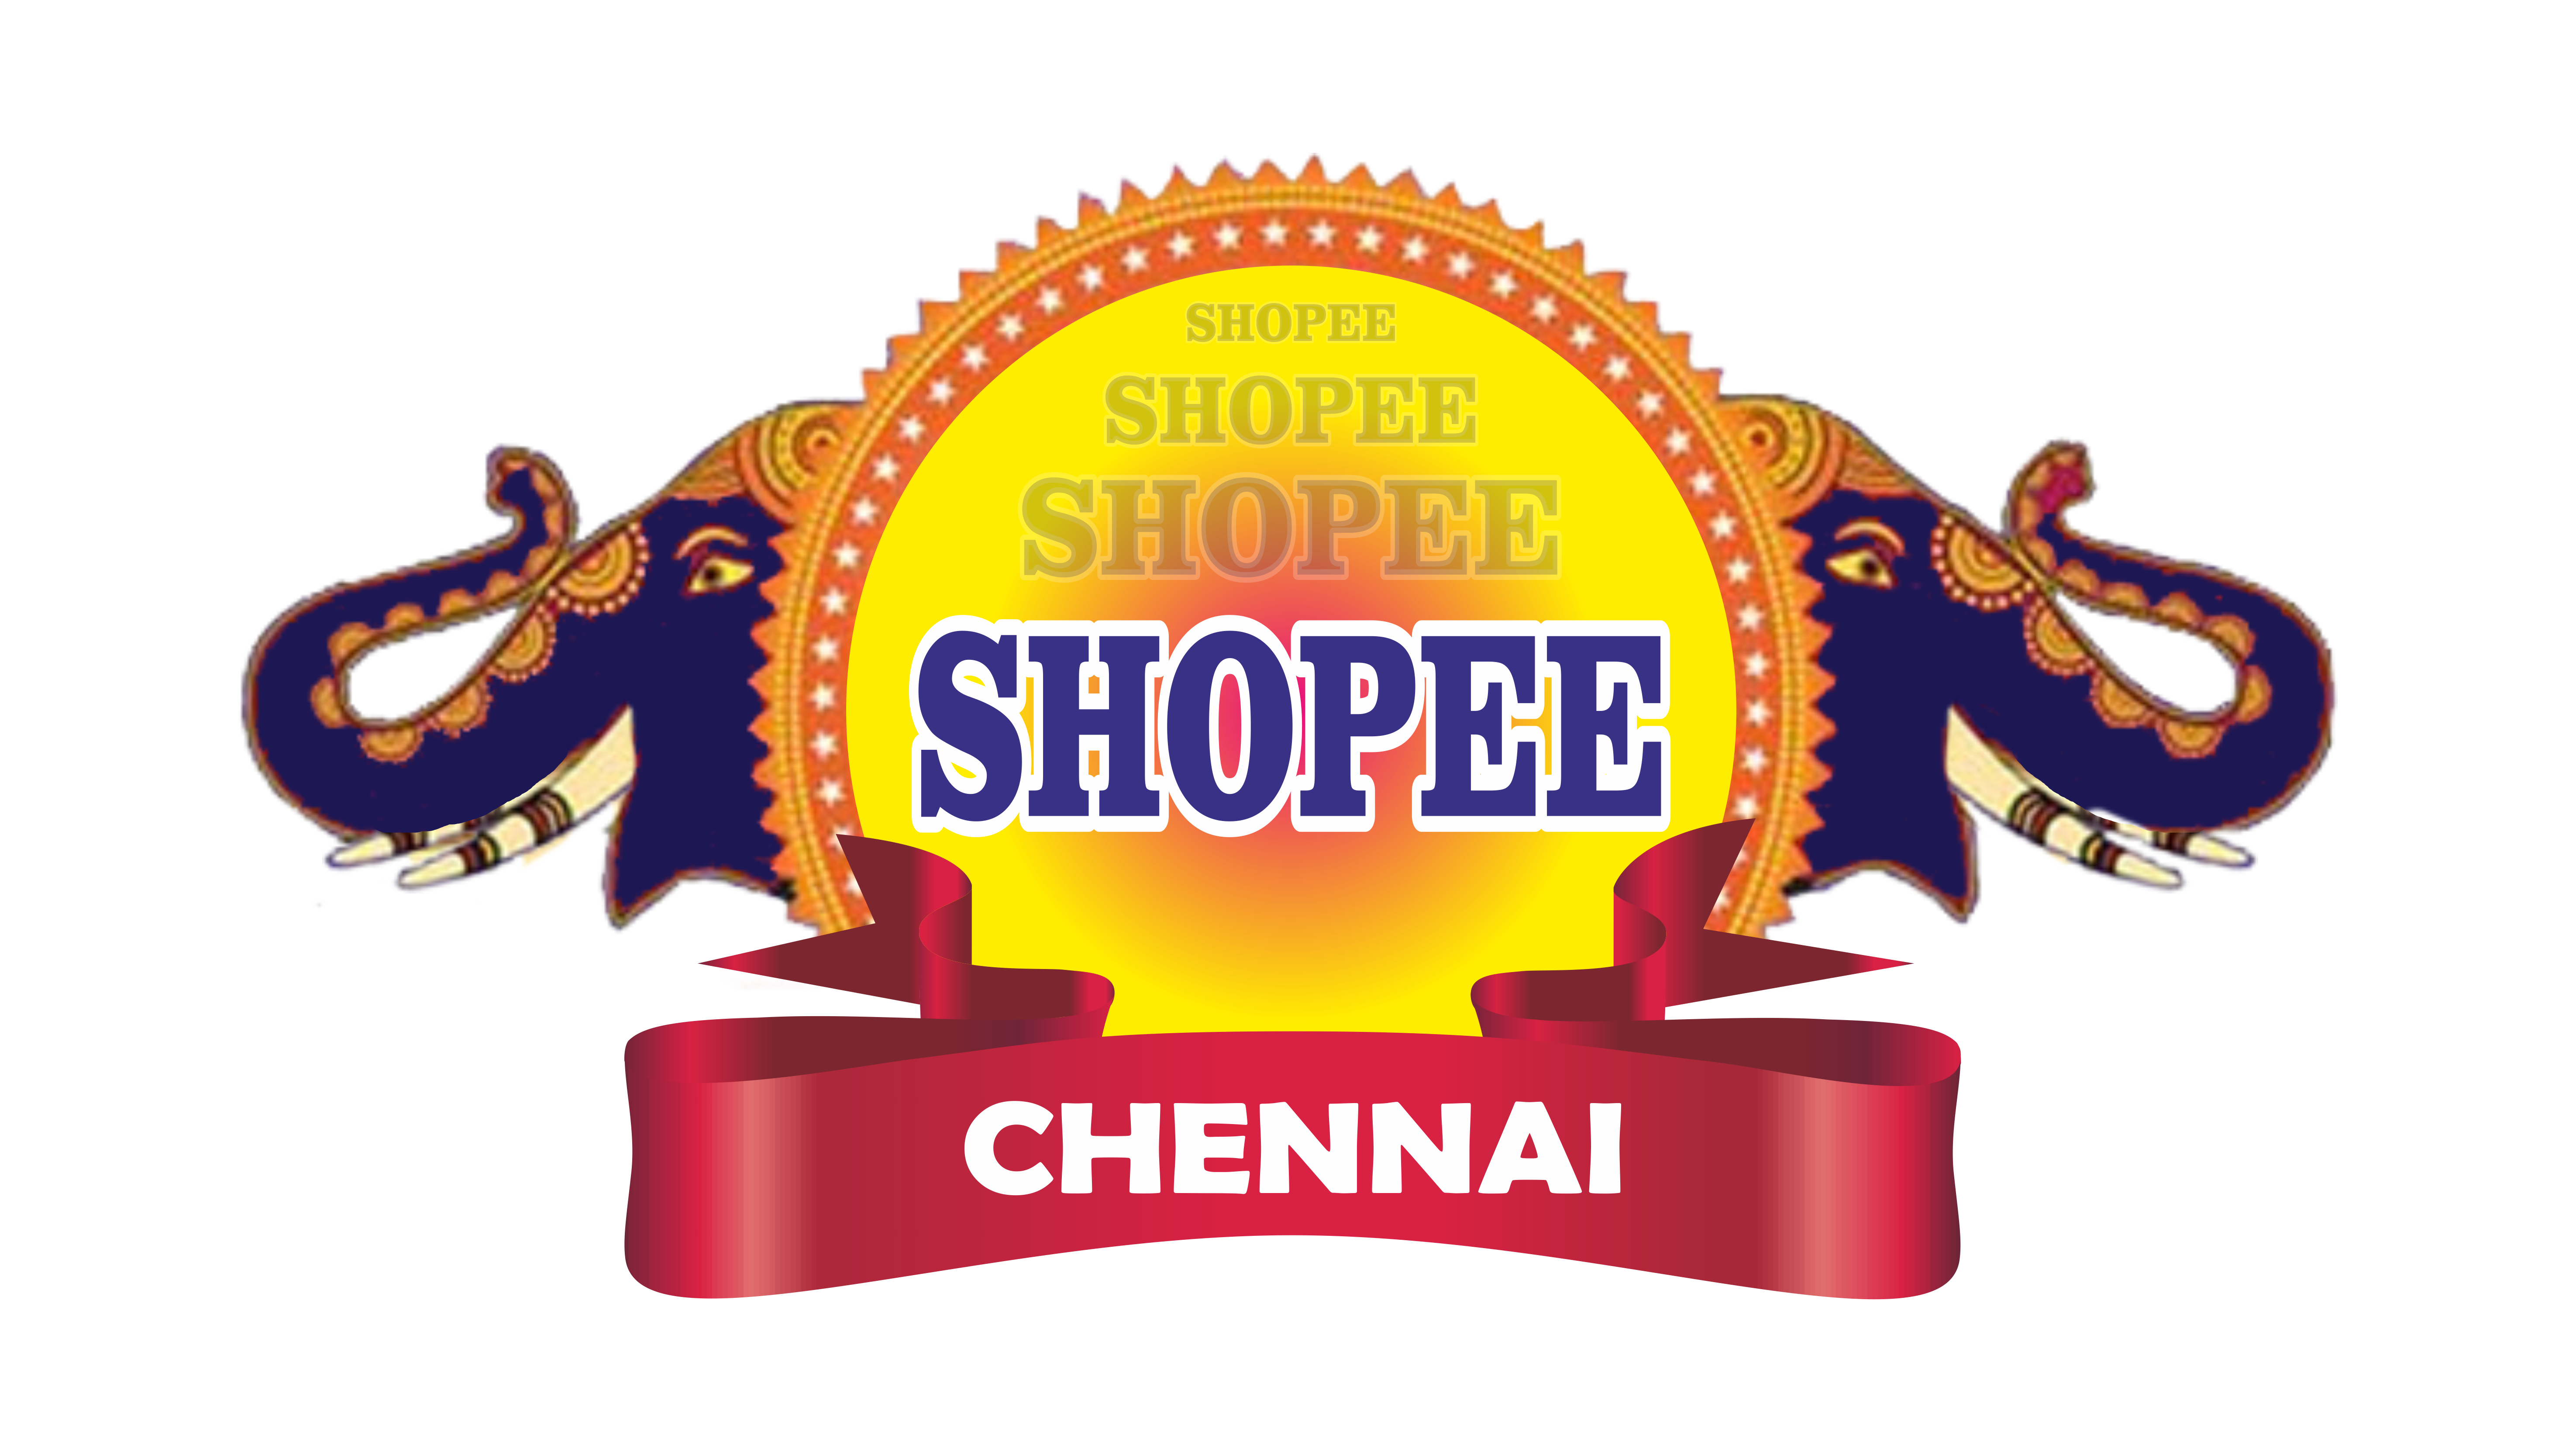 The Chennai silks Tirunelveli #chennaisilks #dress_collection  #tirunelveli#shopping ing.... | By Vivaha Silks & Sarees - The Chennai Silks  -NagercoilFacebook